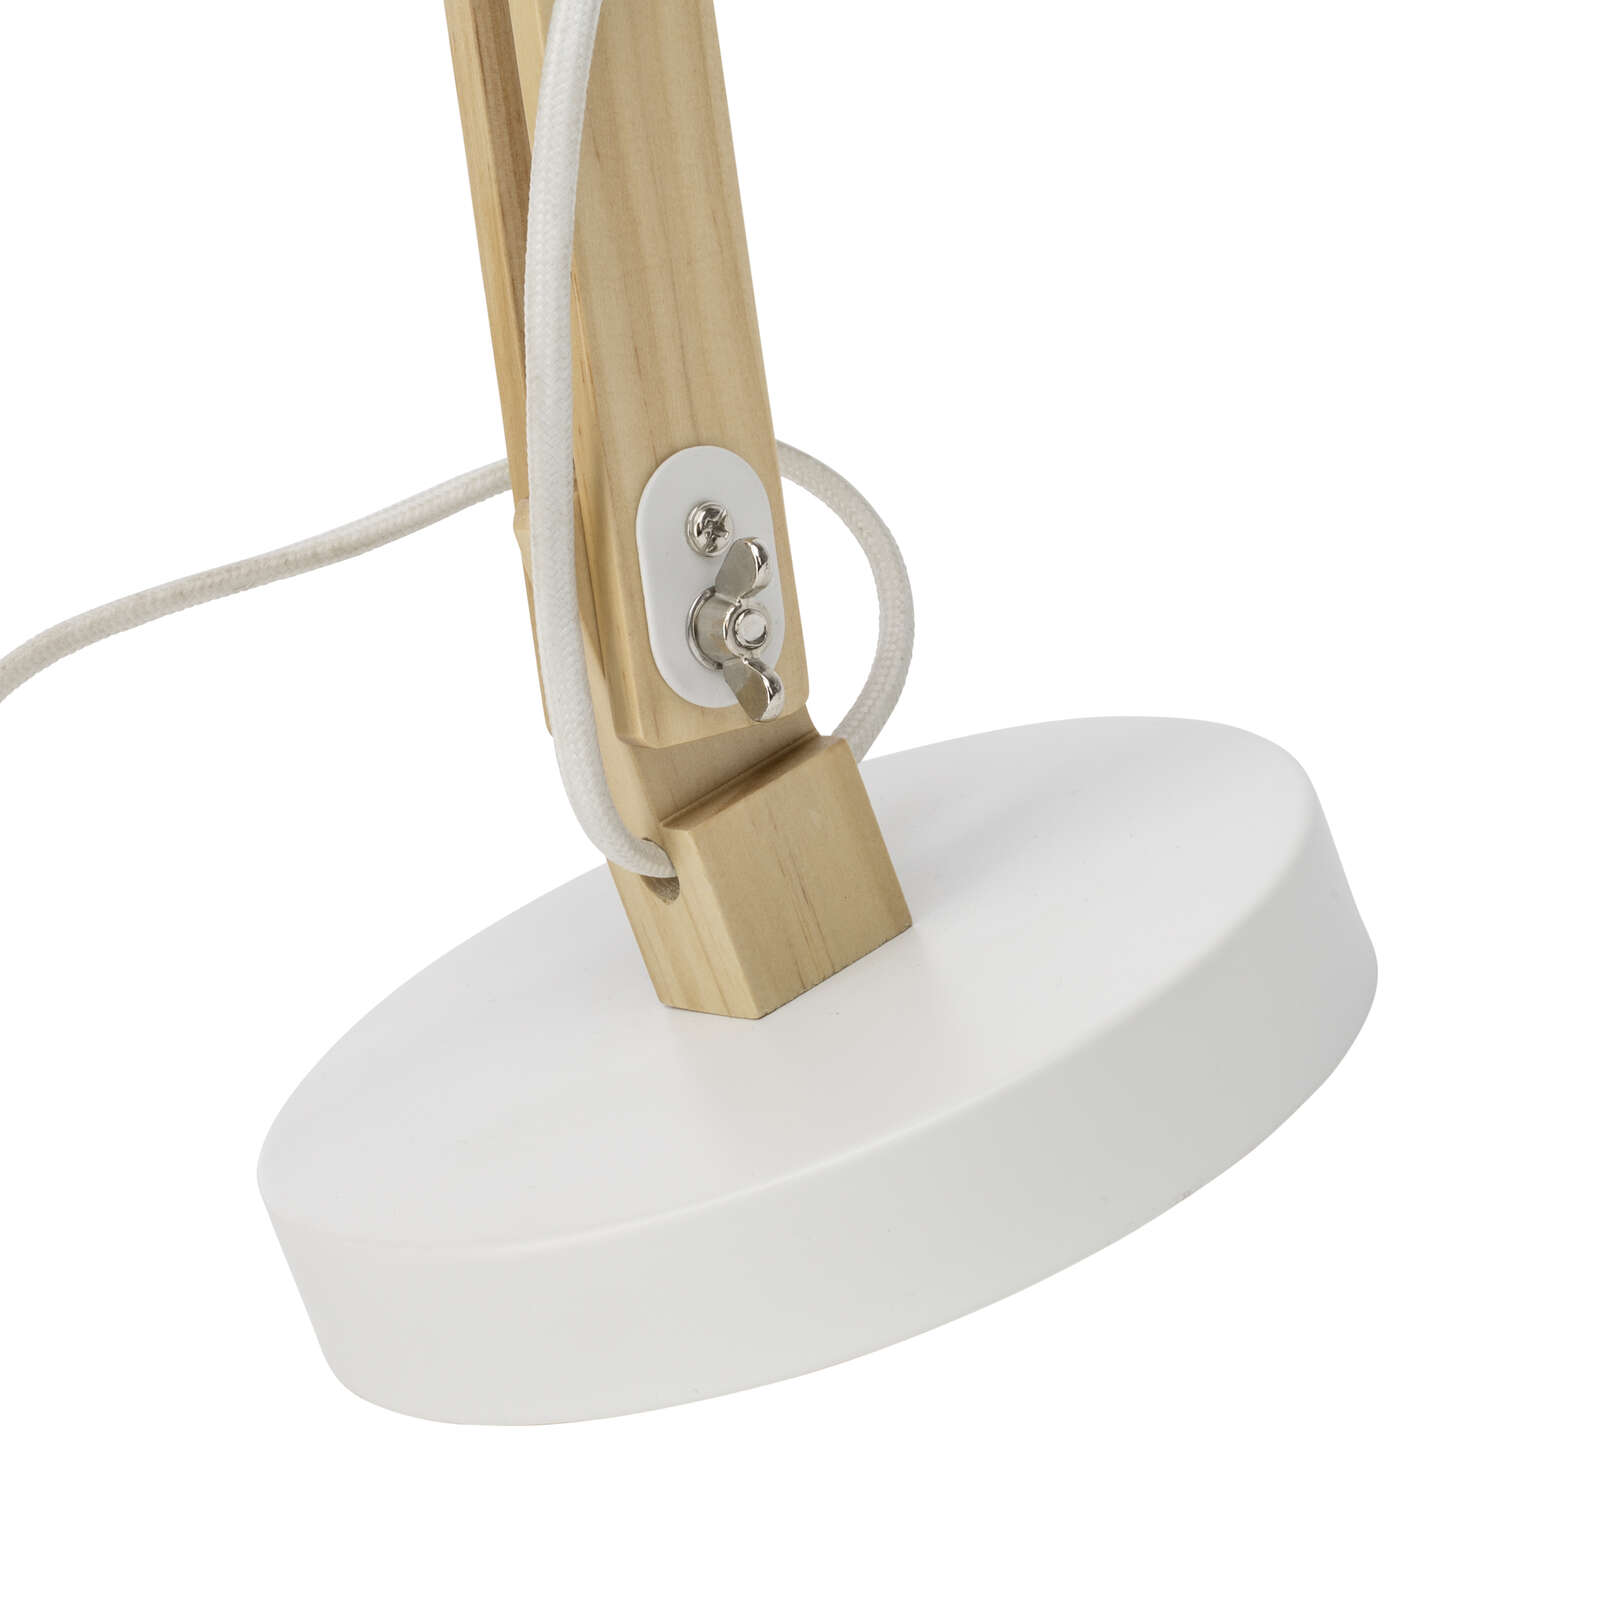             Lampe de table en bois - Lisa 1 - Blanc
        